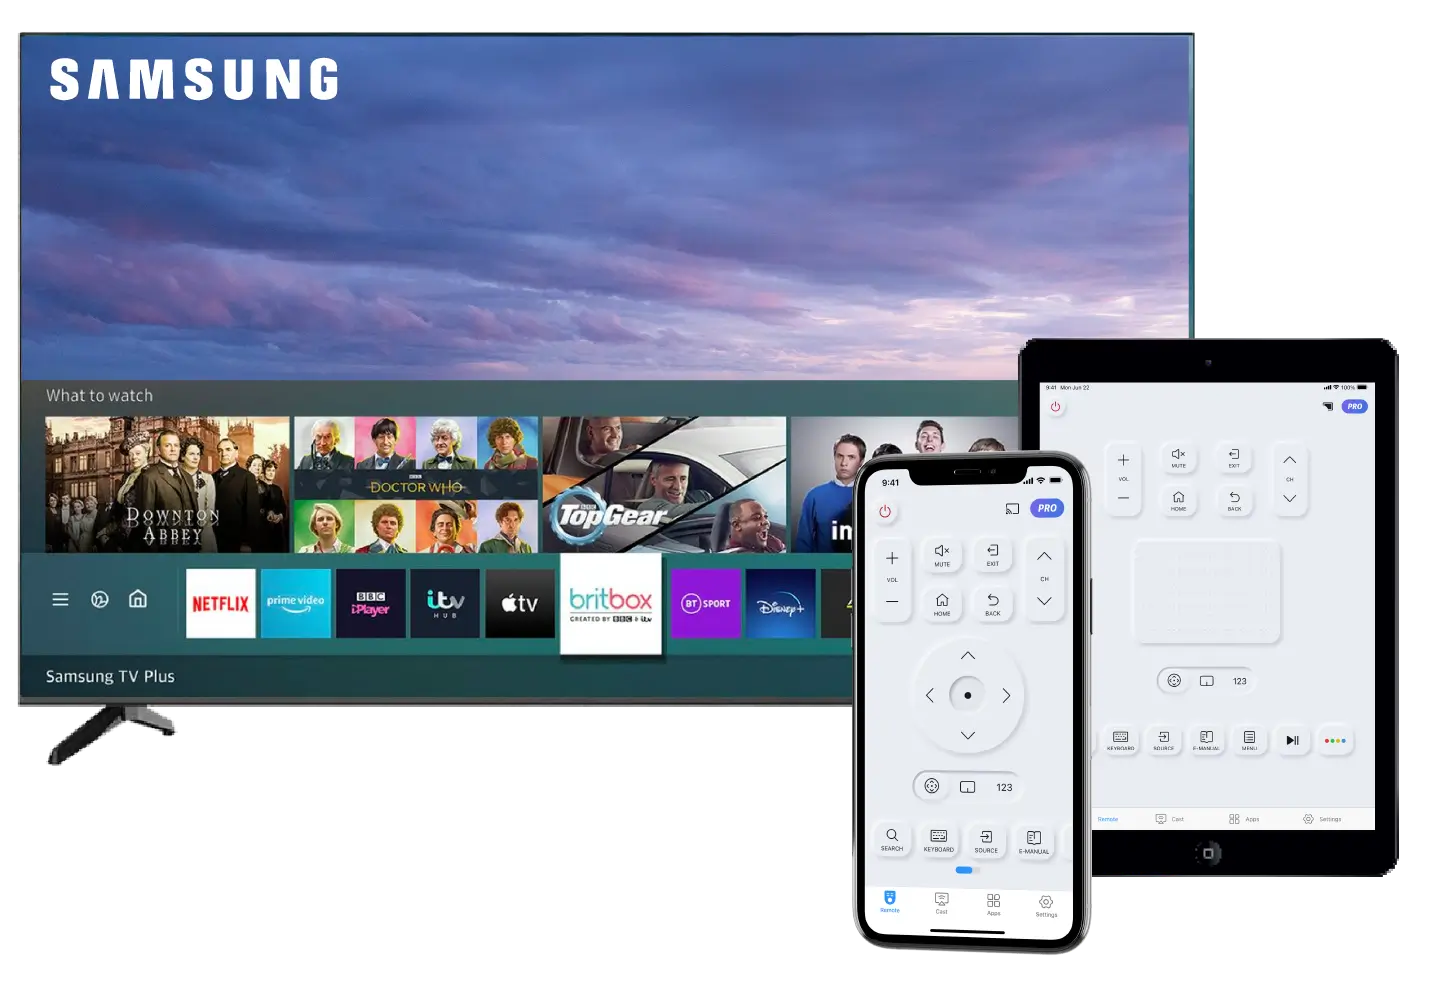 Remote for Samsung TV